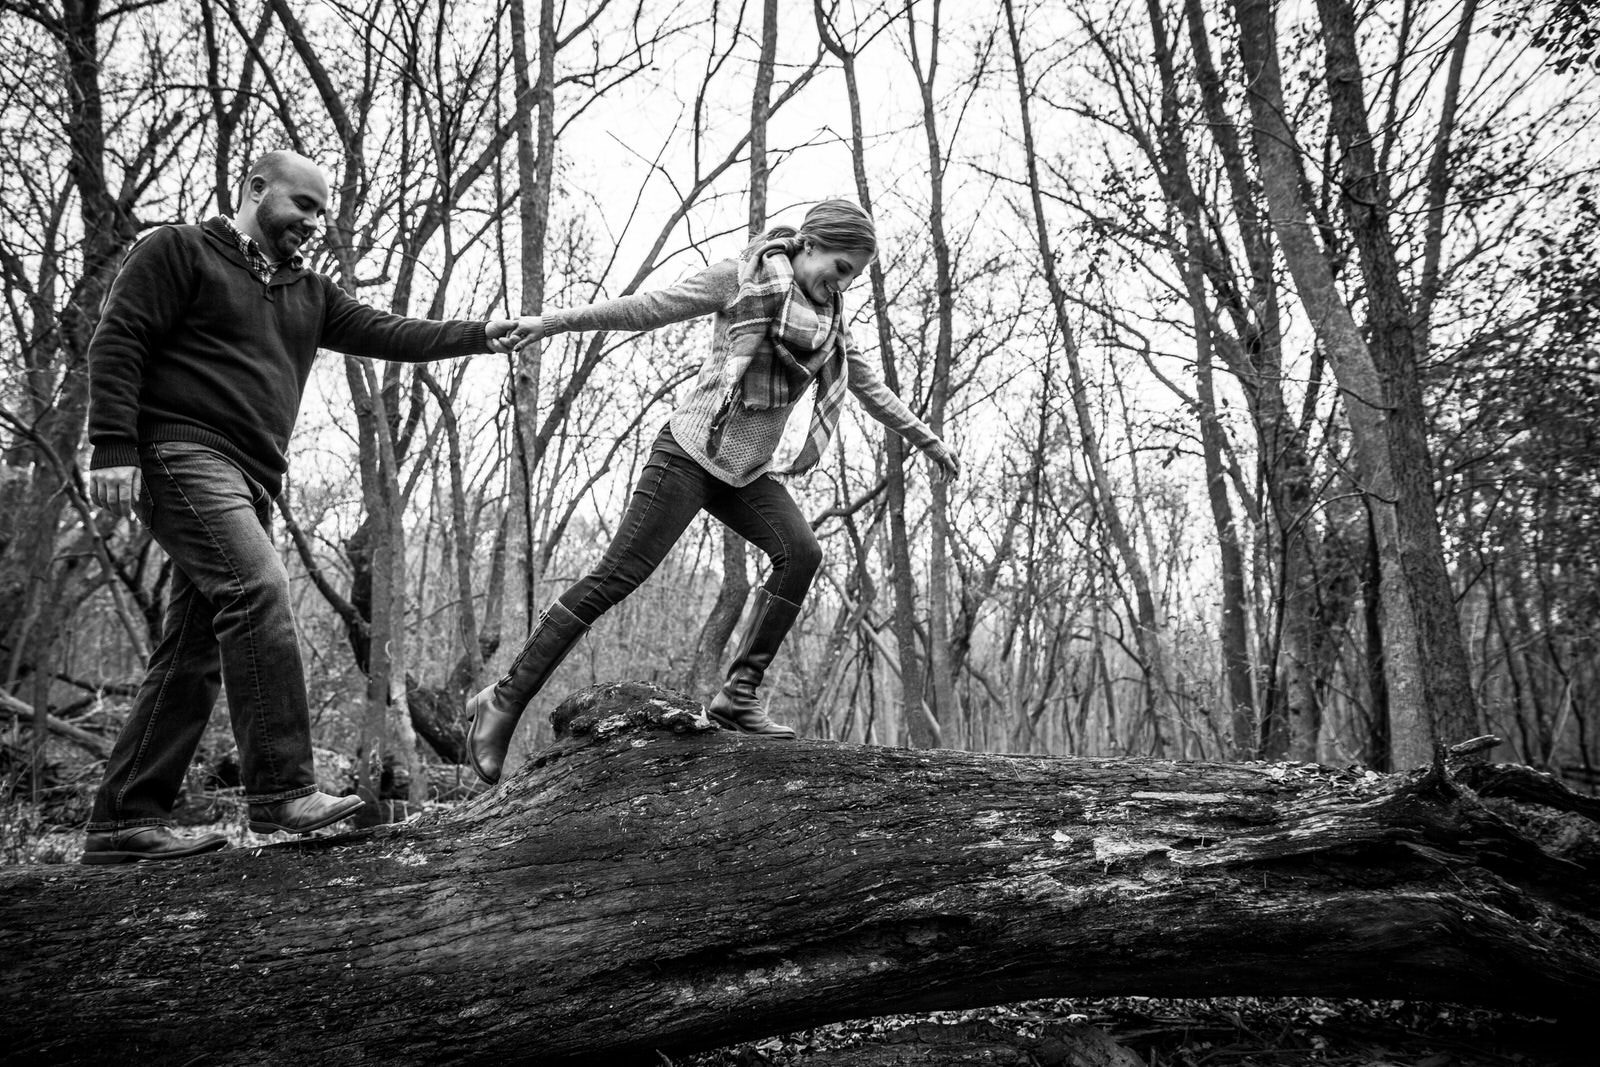 Wildwood Park Engagement Session couple adventures across a log